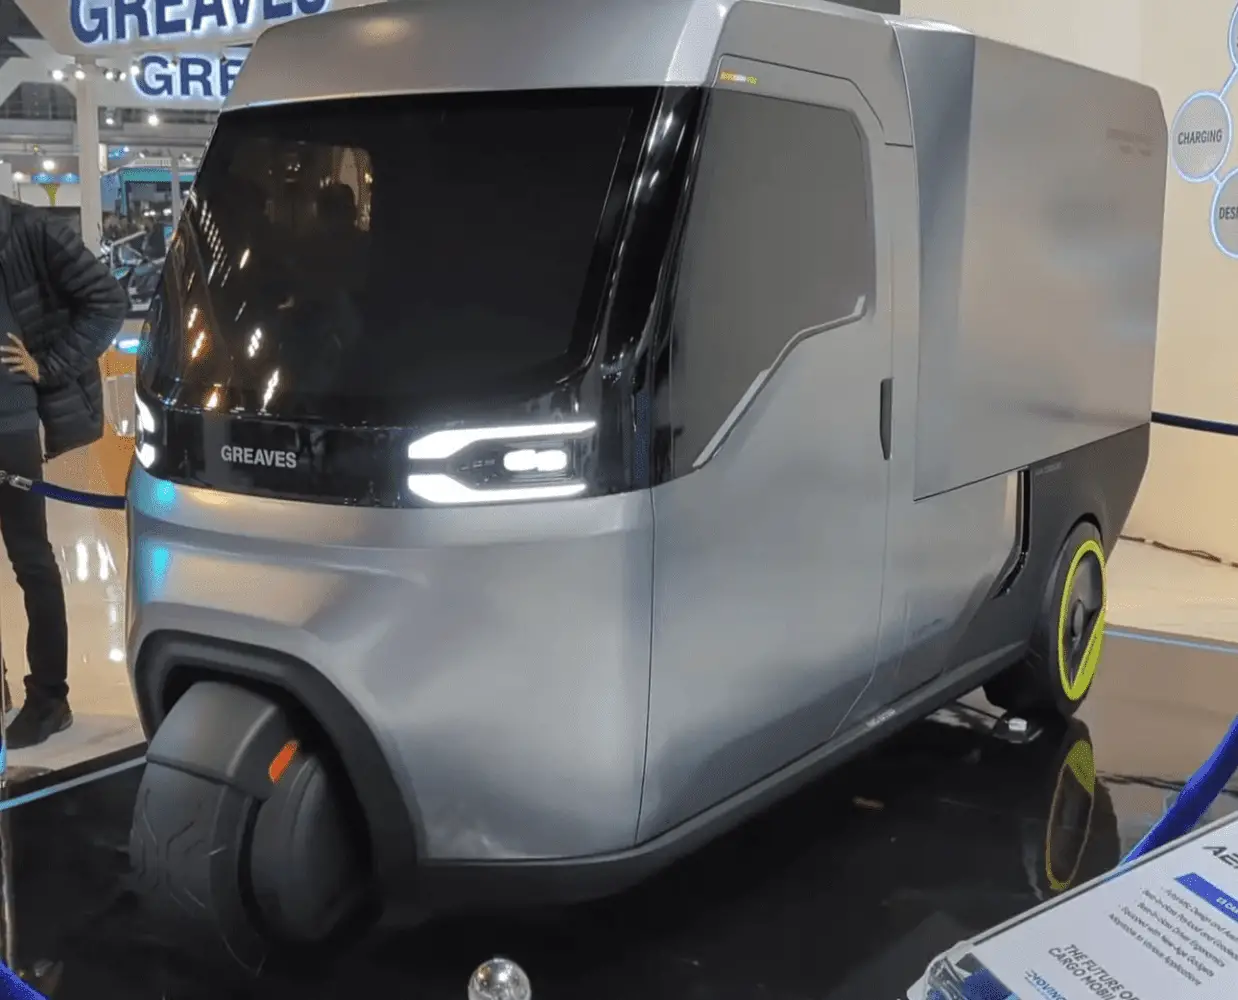 Greaves Aero Vision Electric Rickshaw